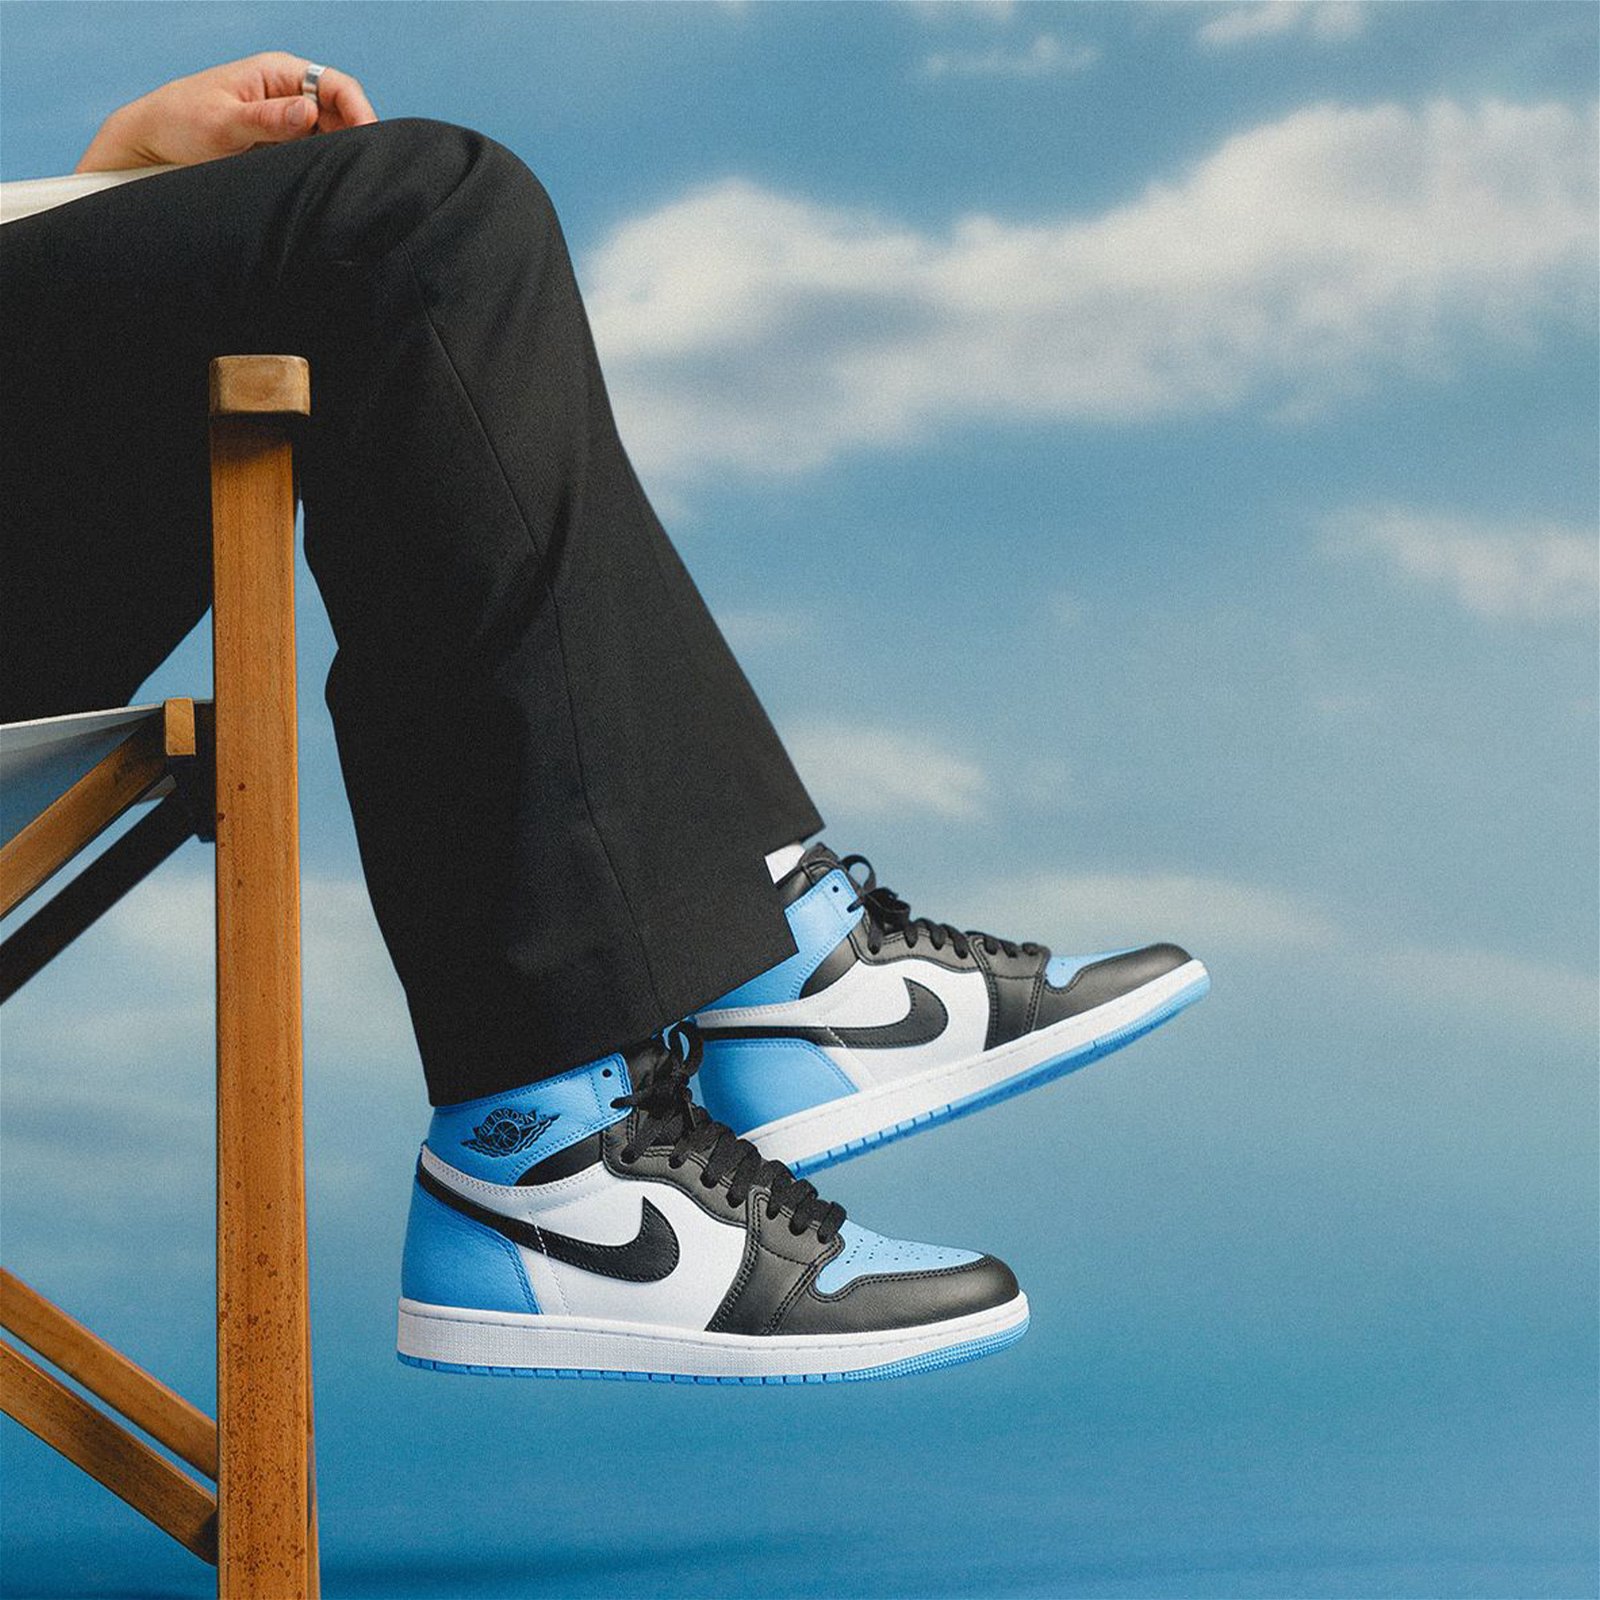 Sneaker of the Week by FLEXDOG - Air Jordan 1 Retro High OG 